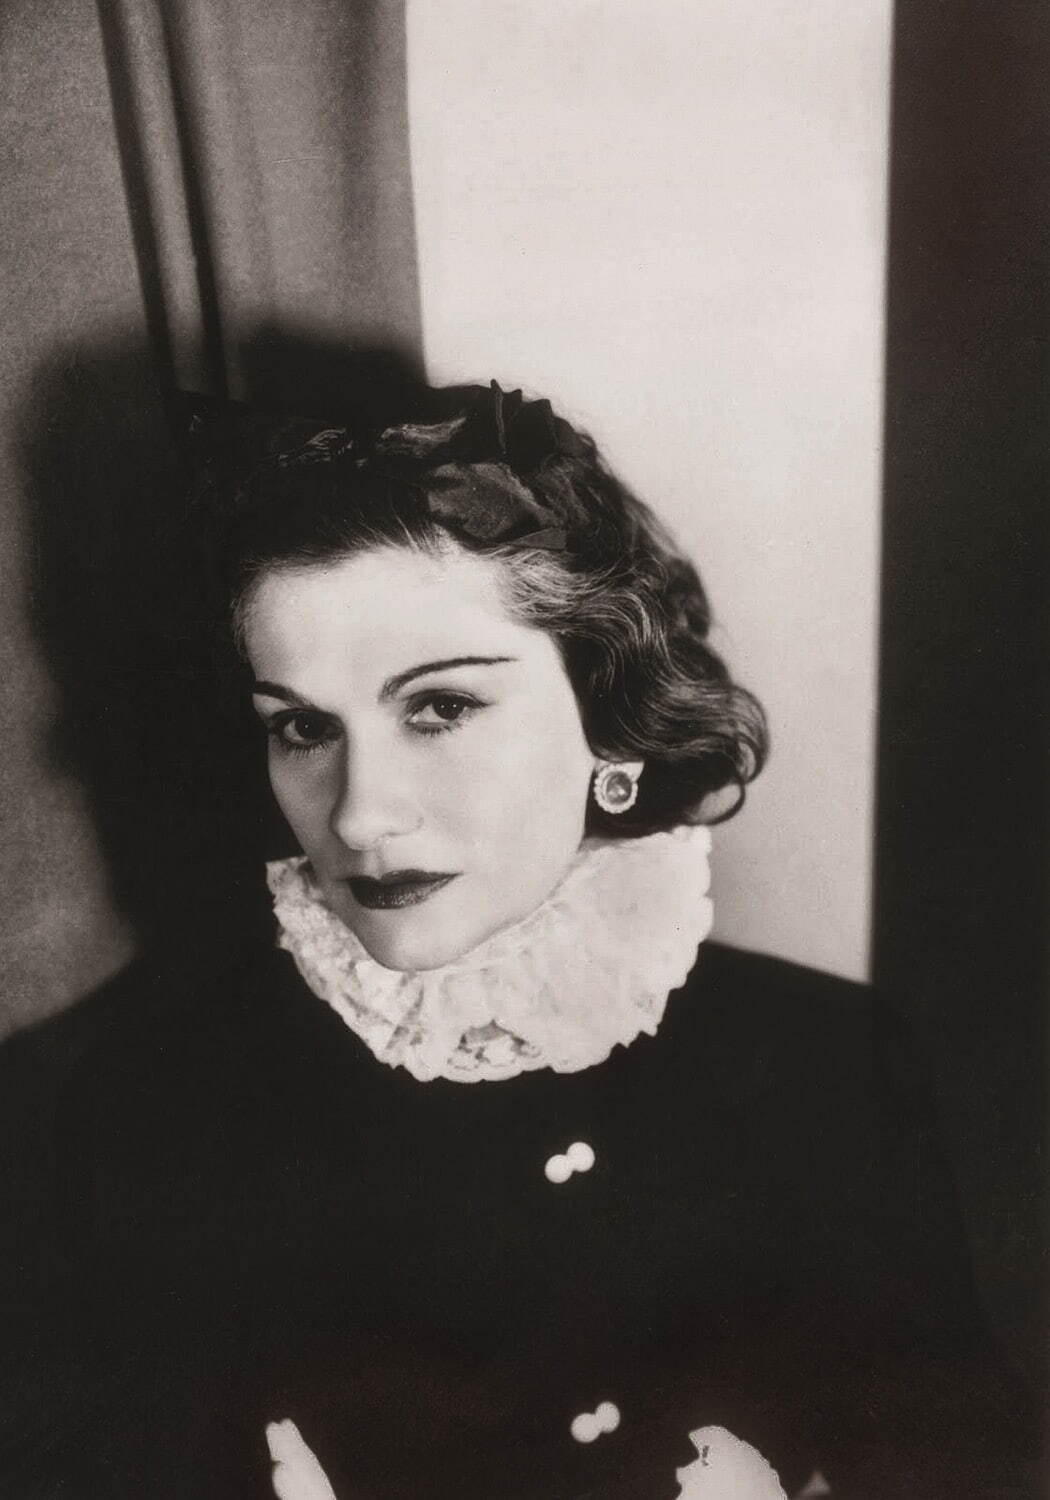 Gabrielle Chanel, 1939
©The George Hoyningen-Huene Estate Archives